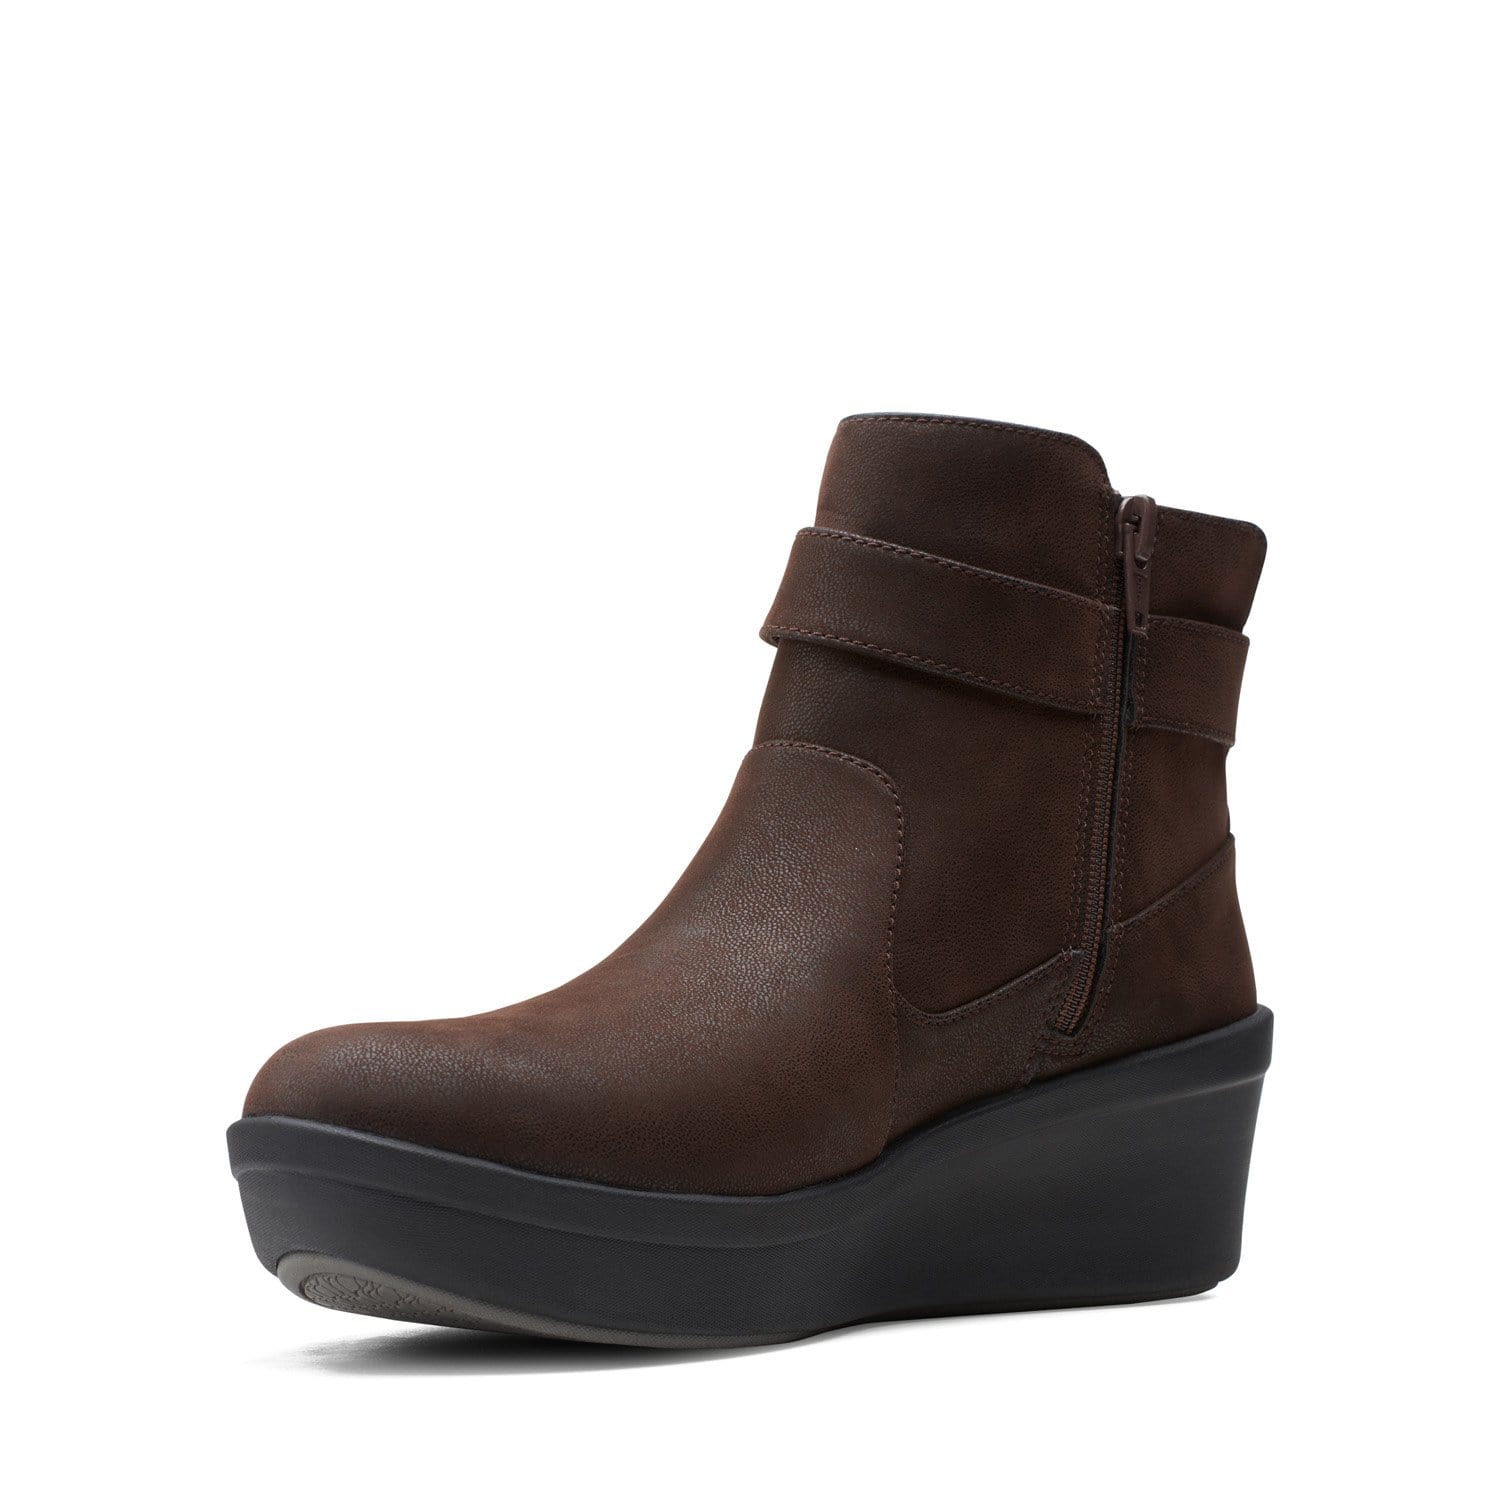 clarks-step-rose-belle-boots-brown-textile-26151834-d-width-standard-fit